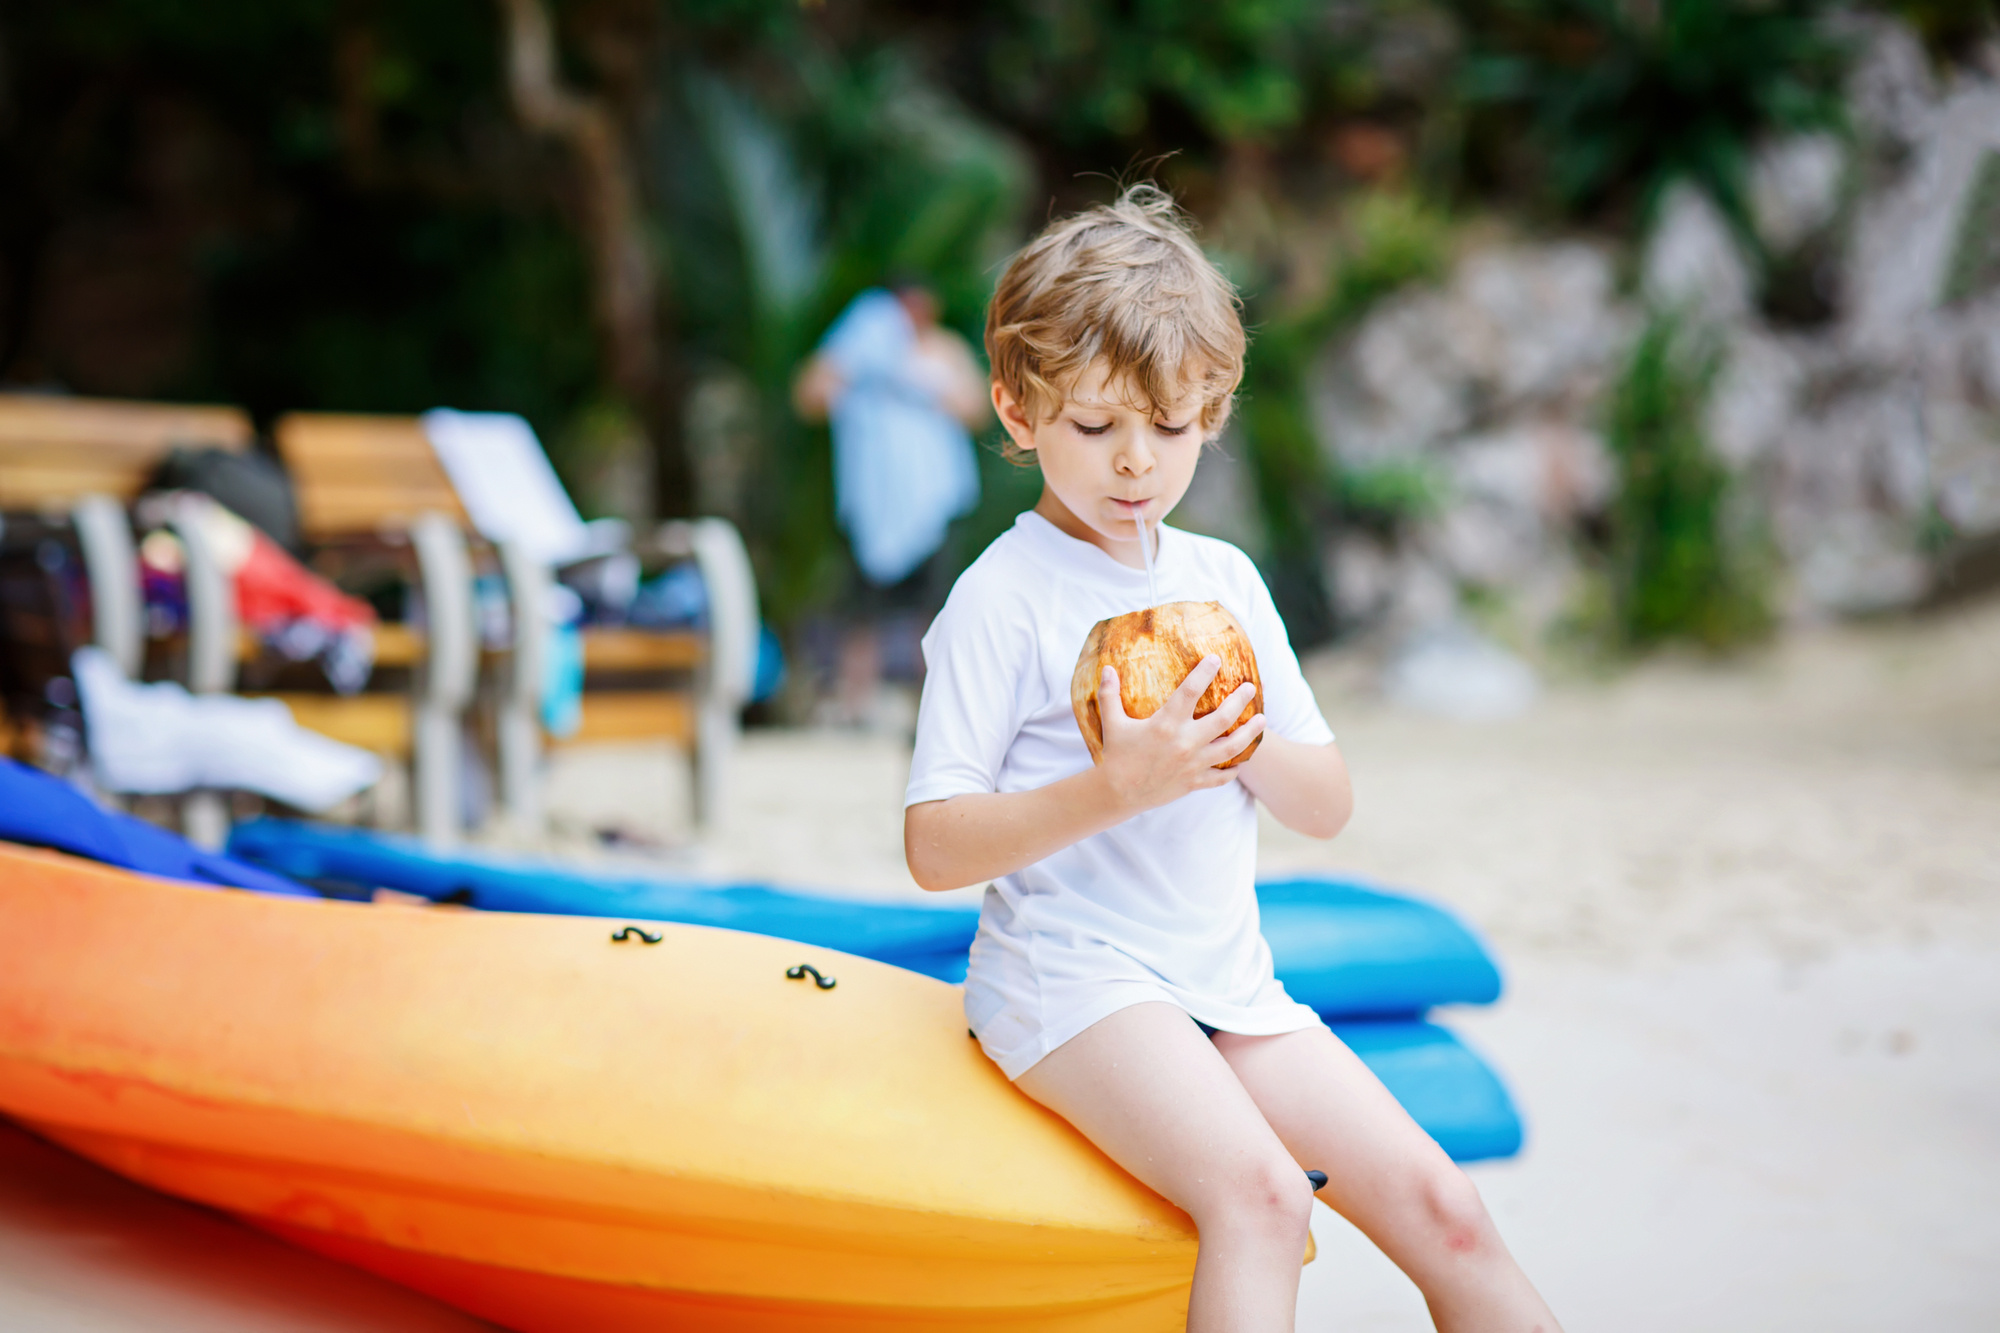 Little kid boy drinking coconut juice on tropical beach